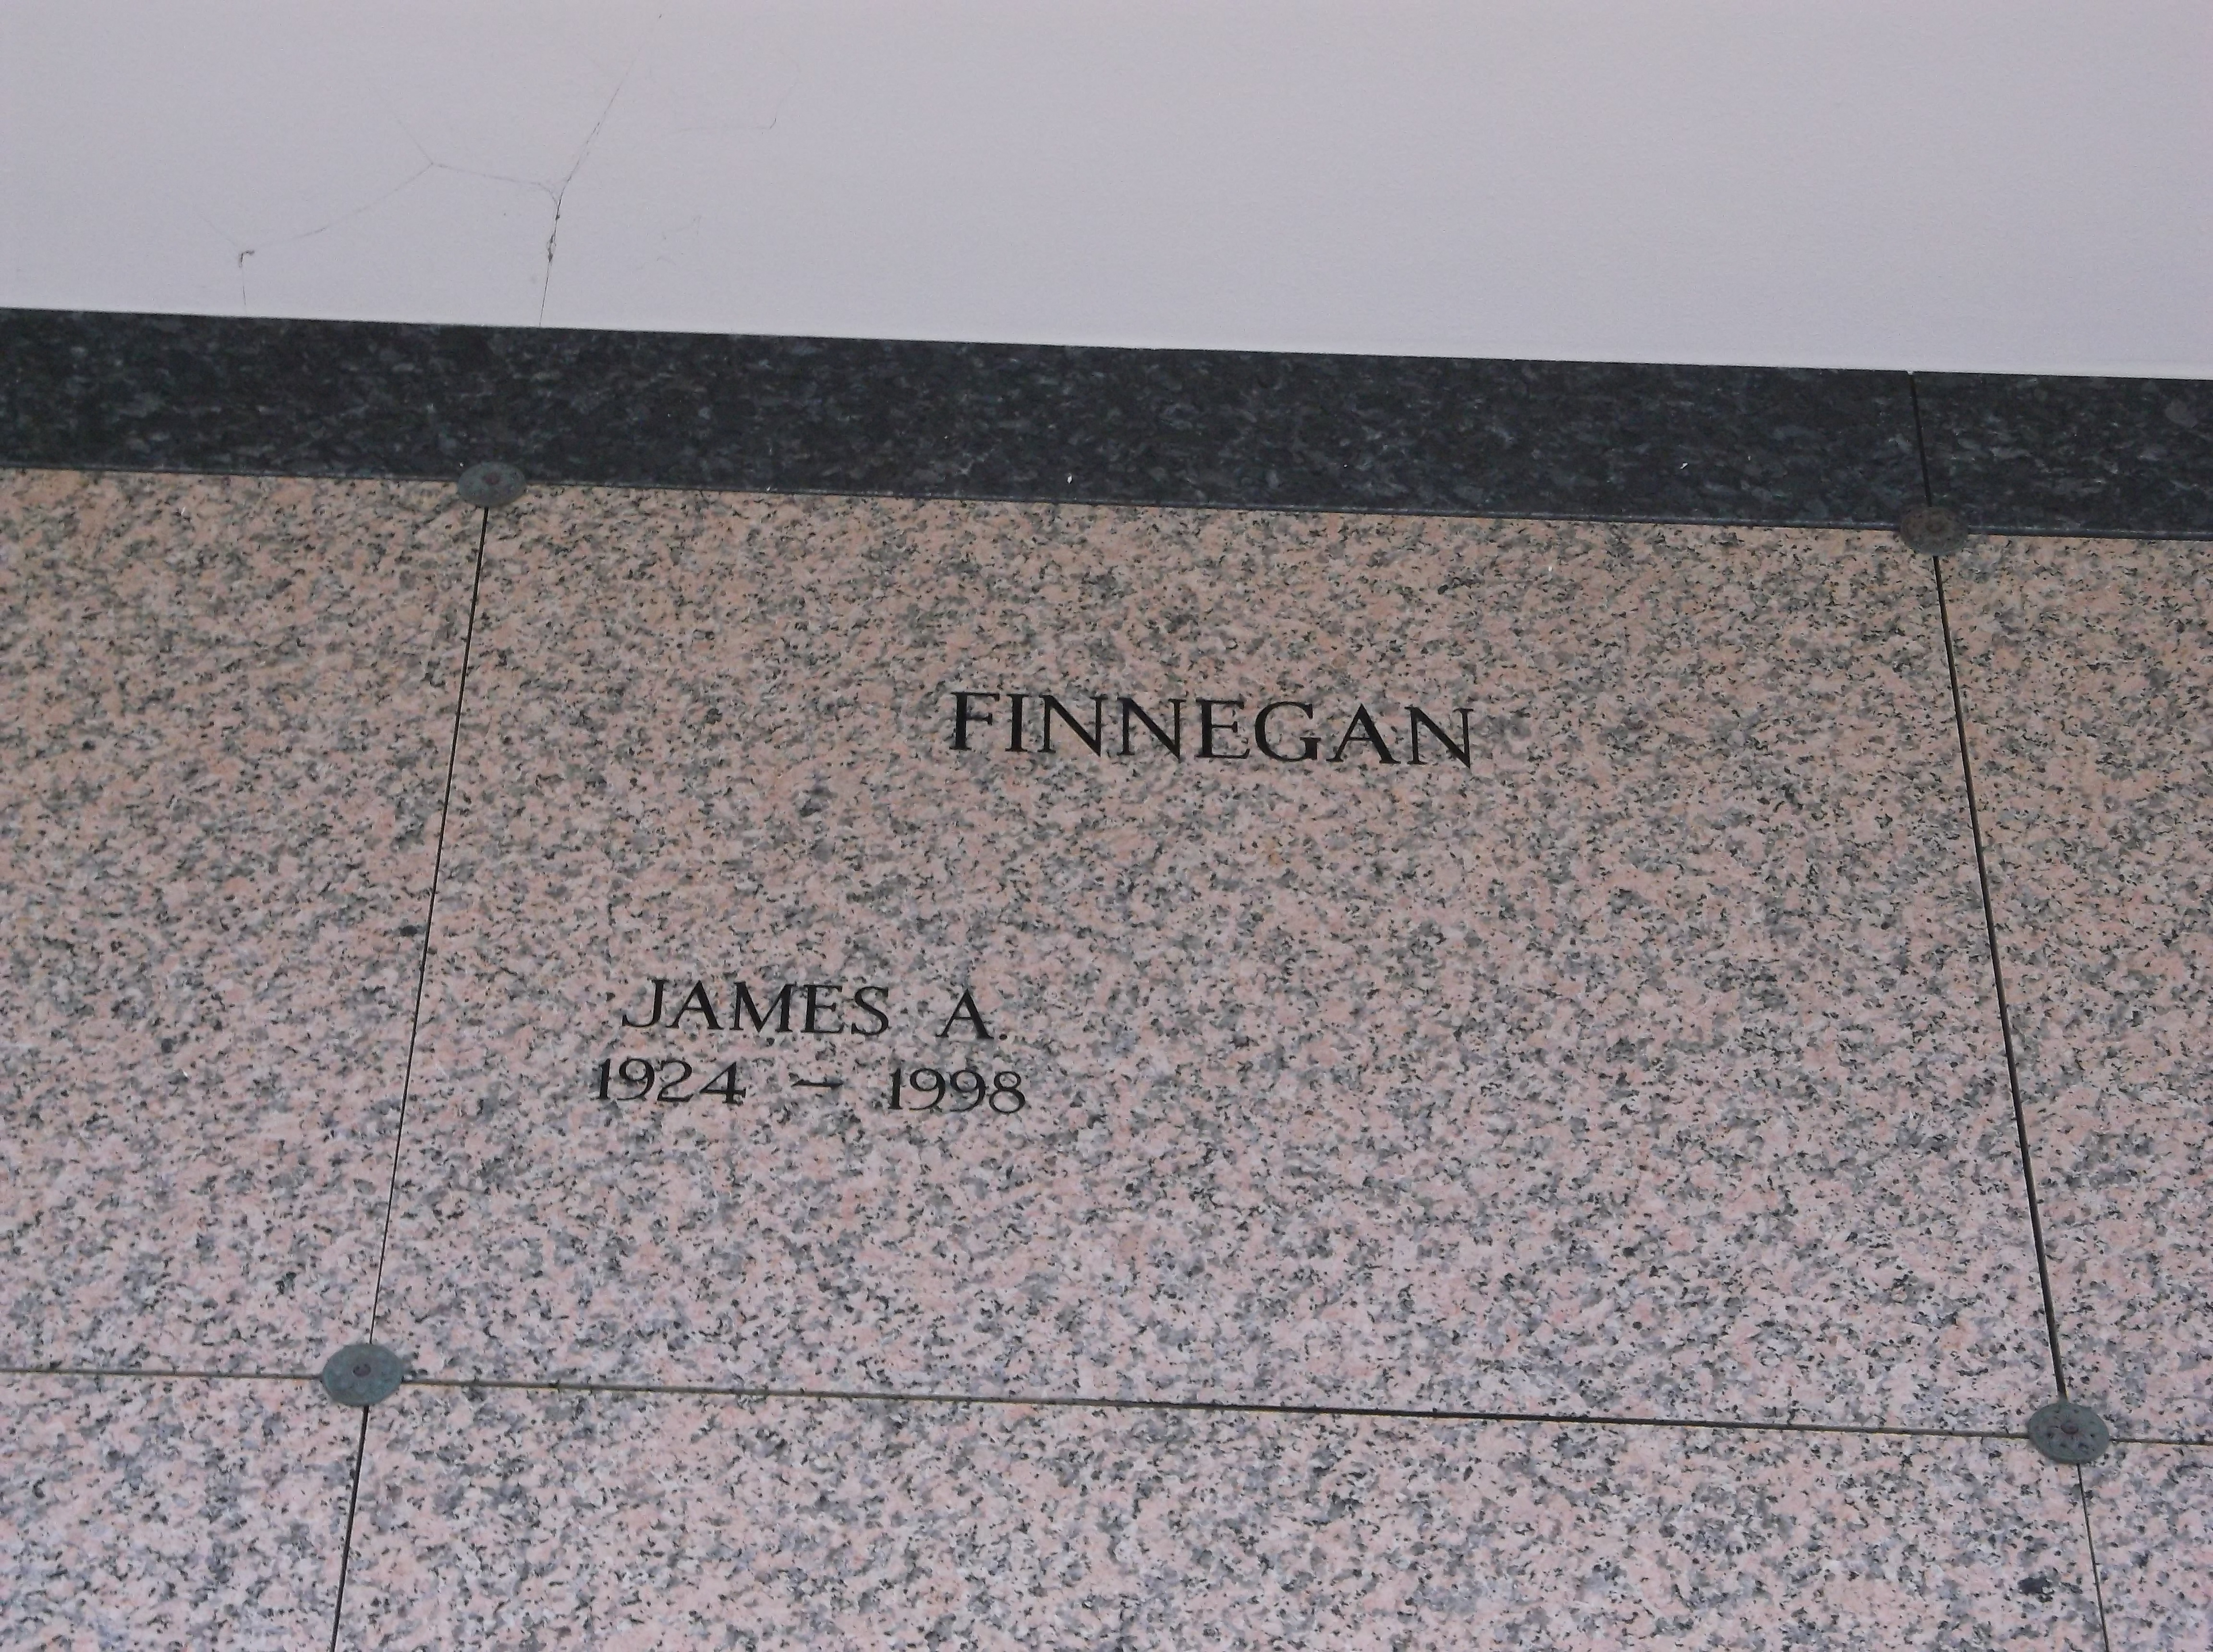 James A Finnegan